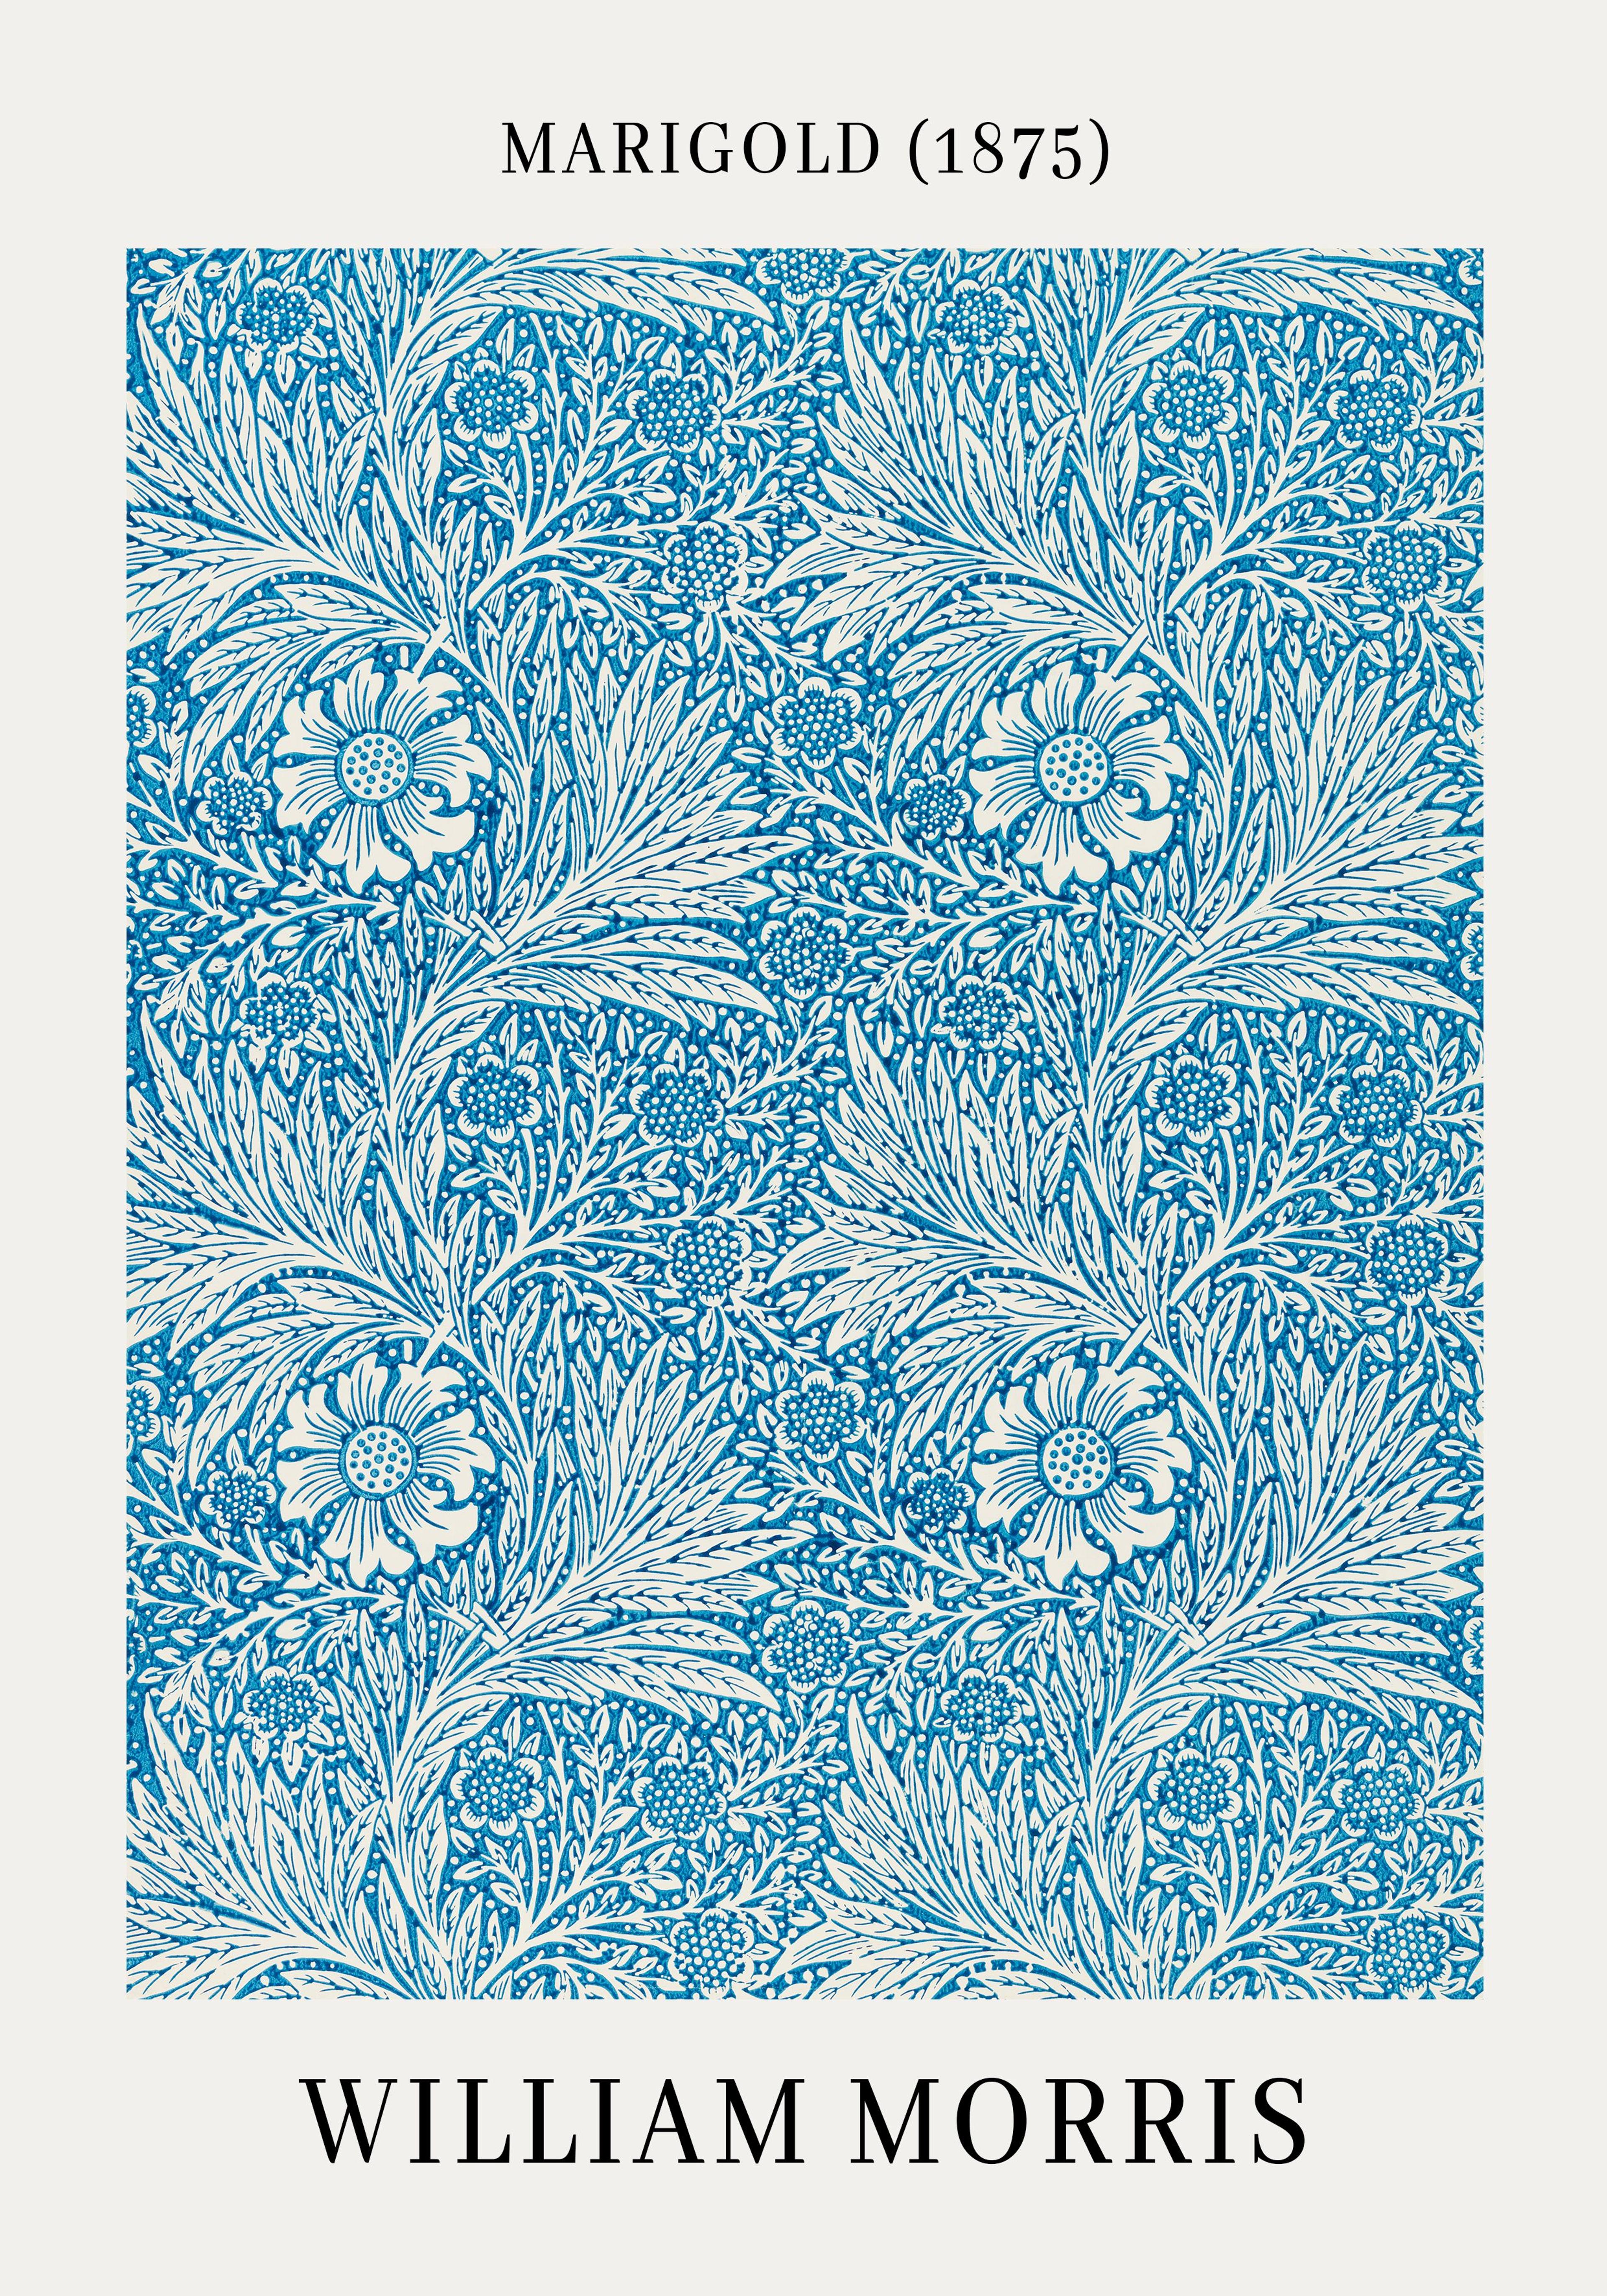 Marigold - plakat z patternem Williama Morrisa w niebieskich kolorach